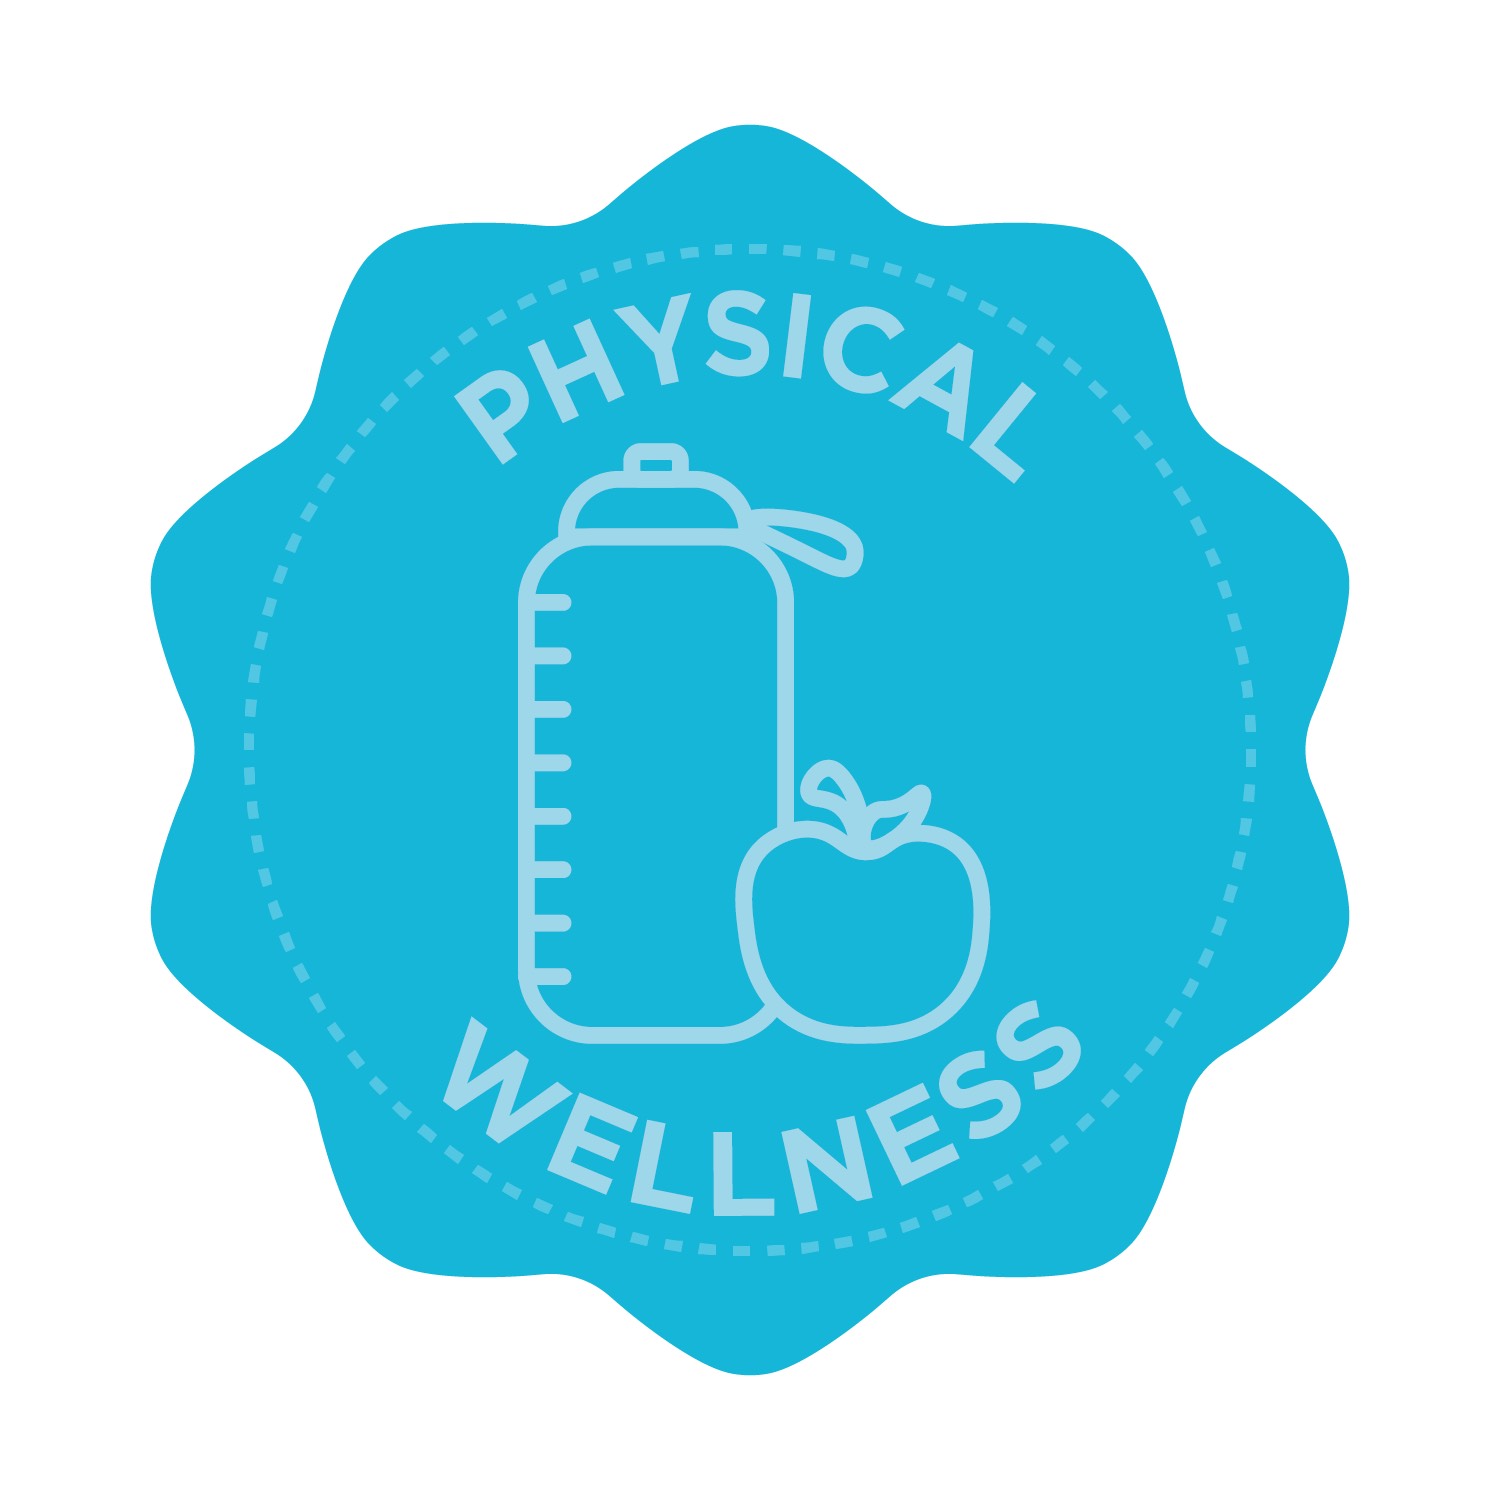 Physical Wellness